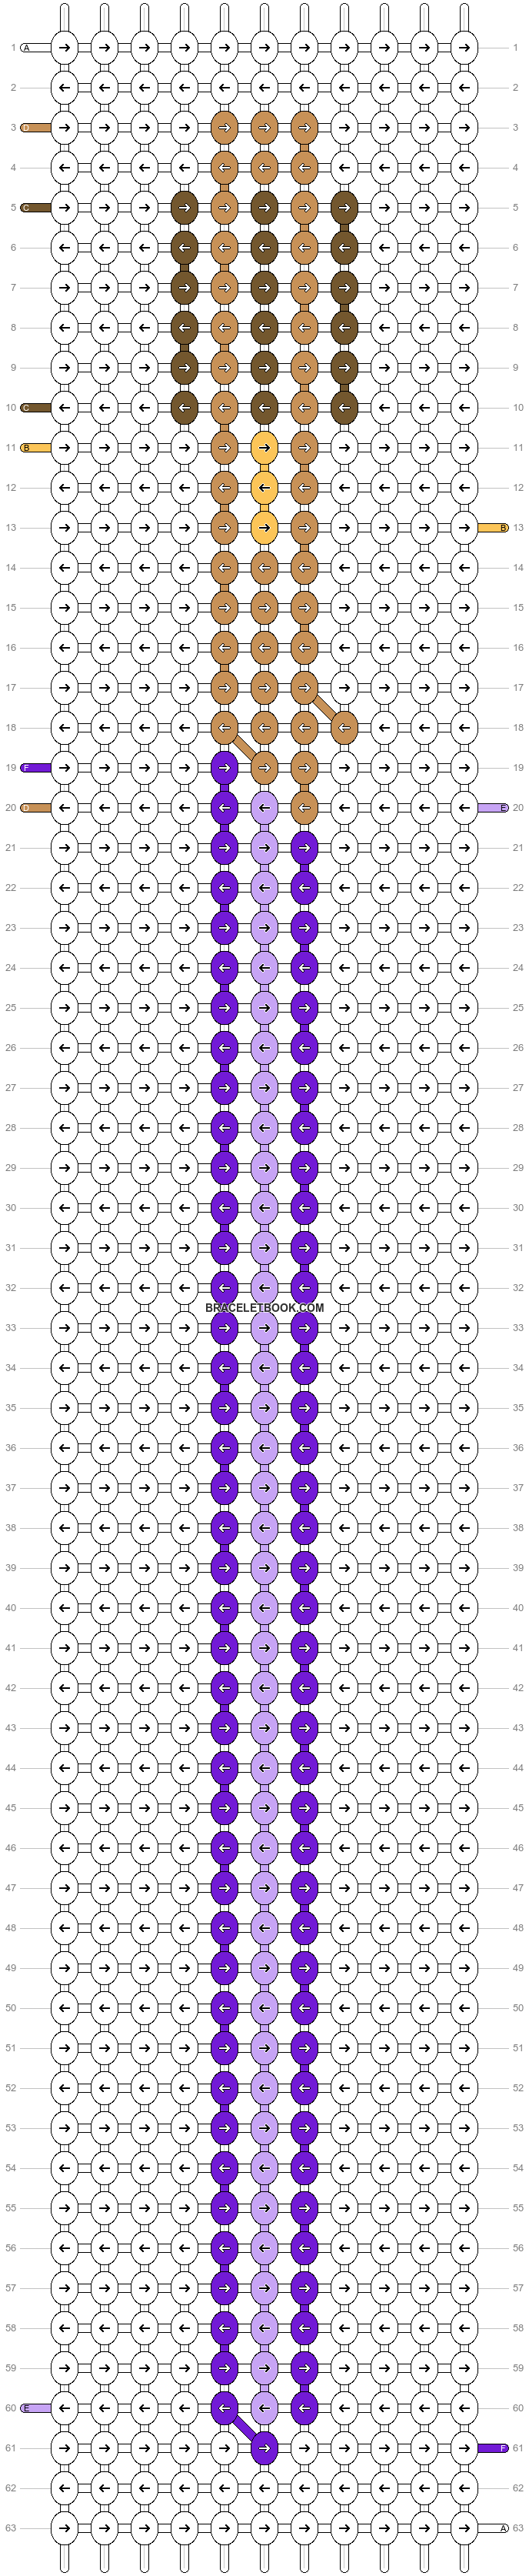 Alpha pattern #39836 variation #82100 pattern